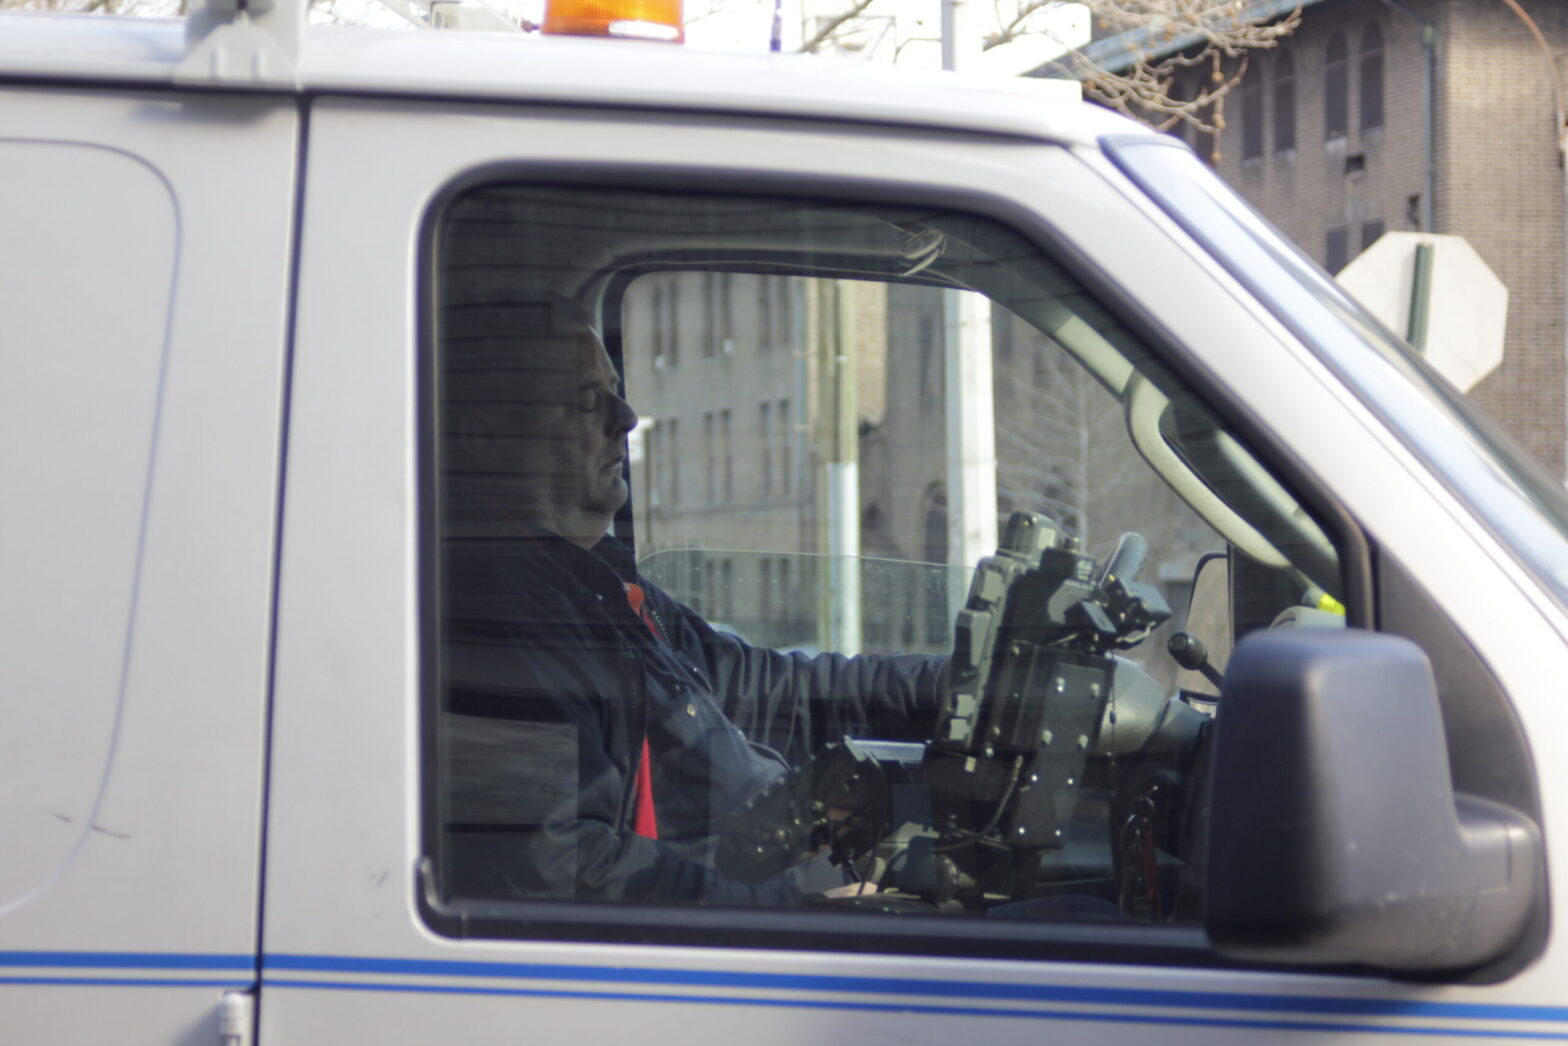 image of a man asleep behind the wheel of a van